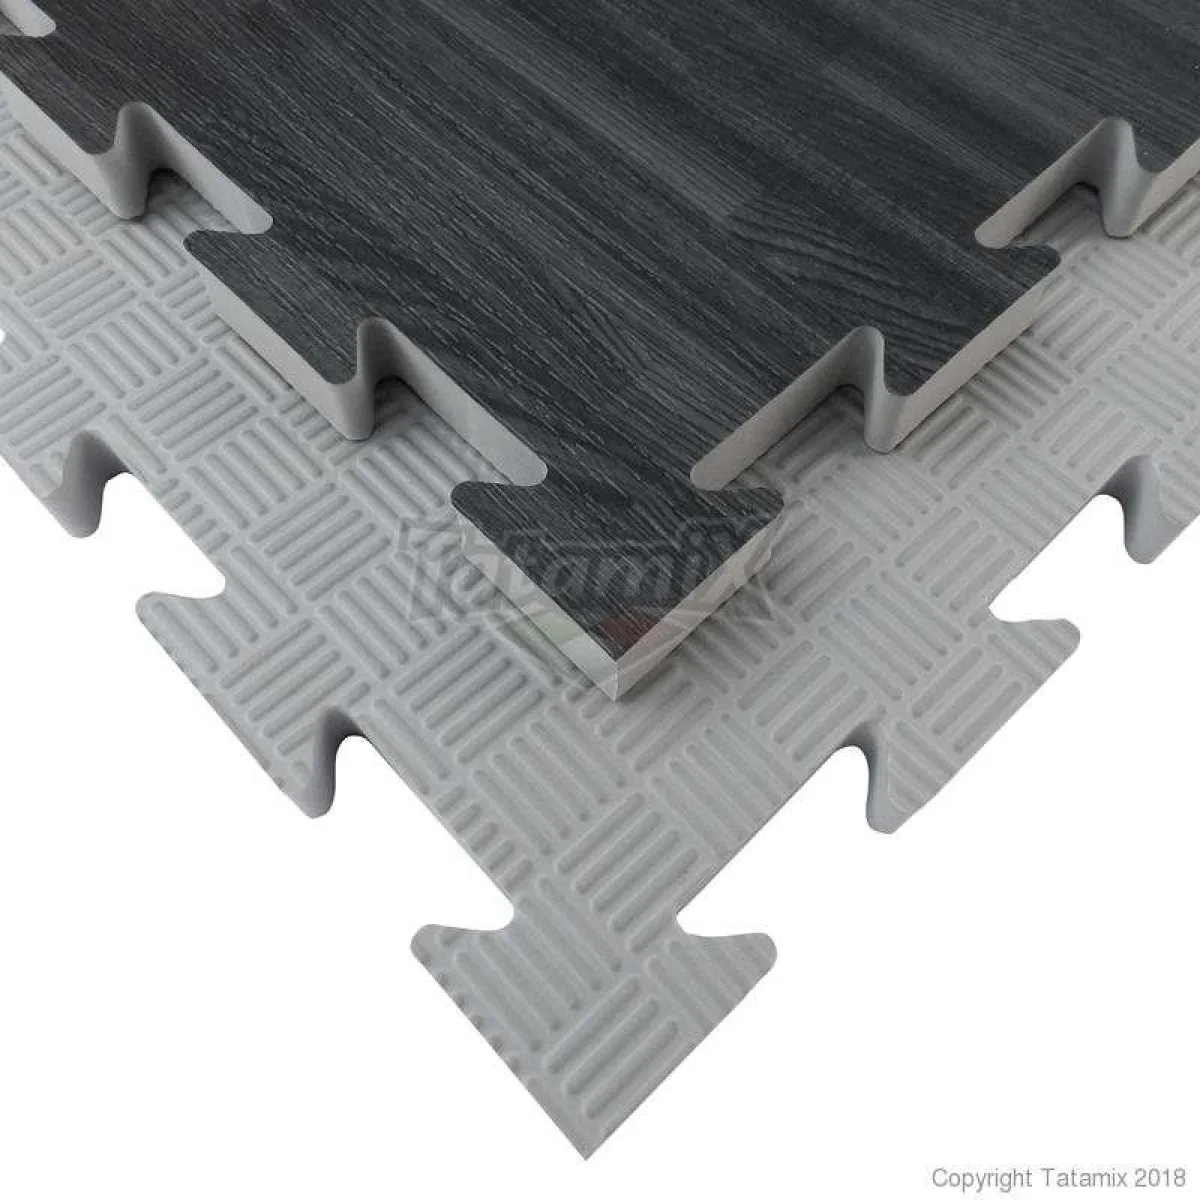 Martial arts mat Tatami W20P wood look black/grey 100 cm x 100 cm x 2 cm